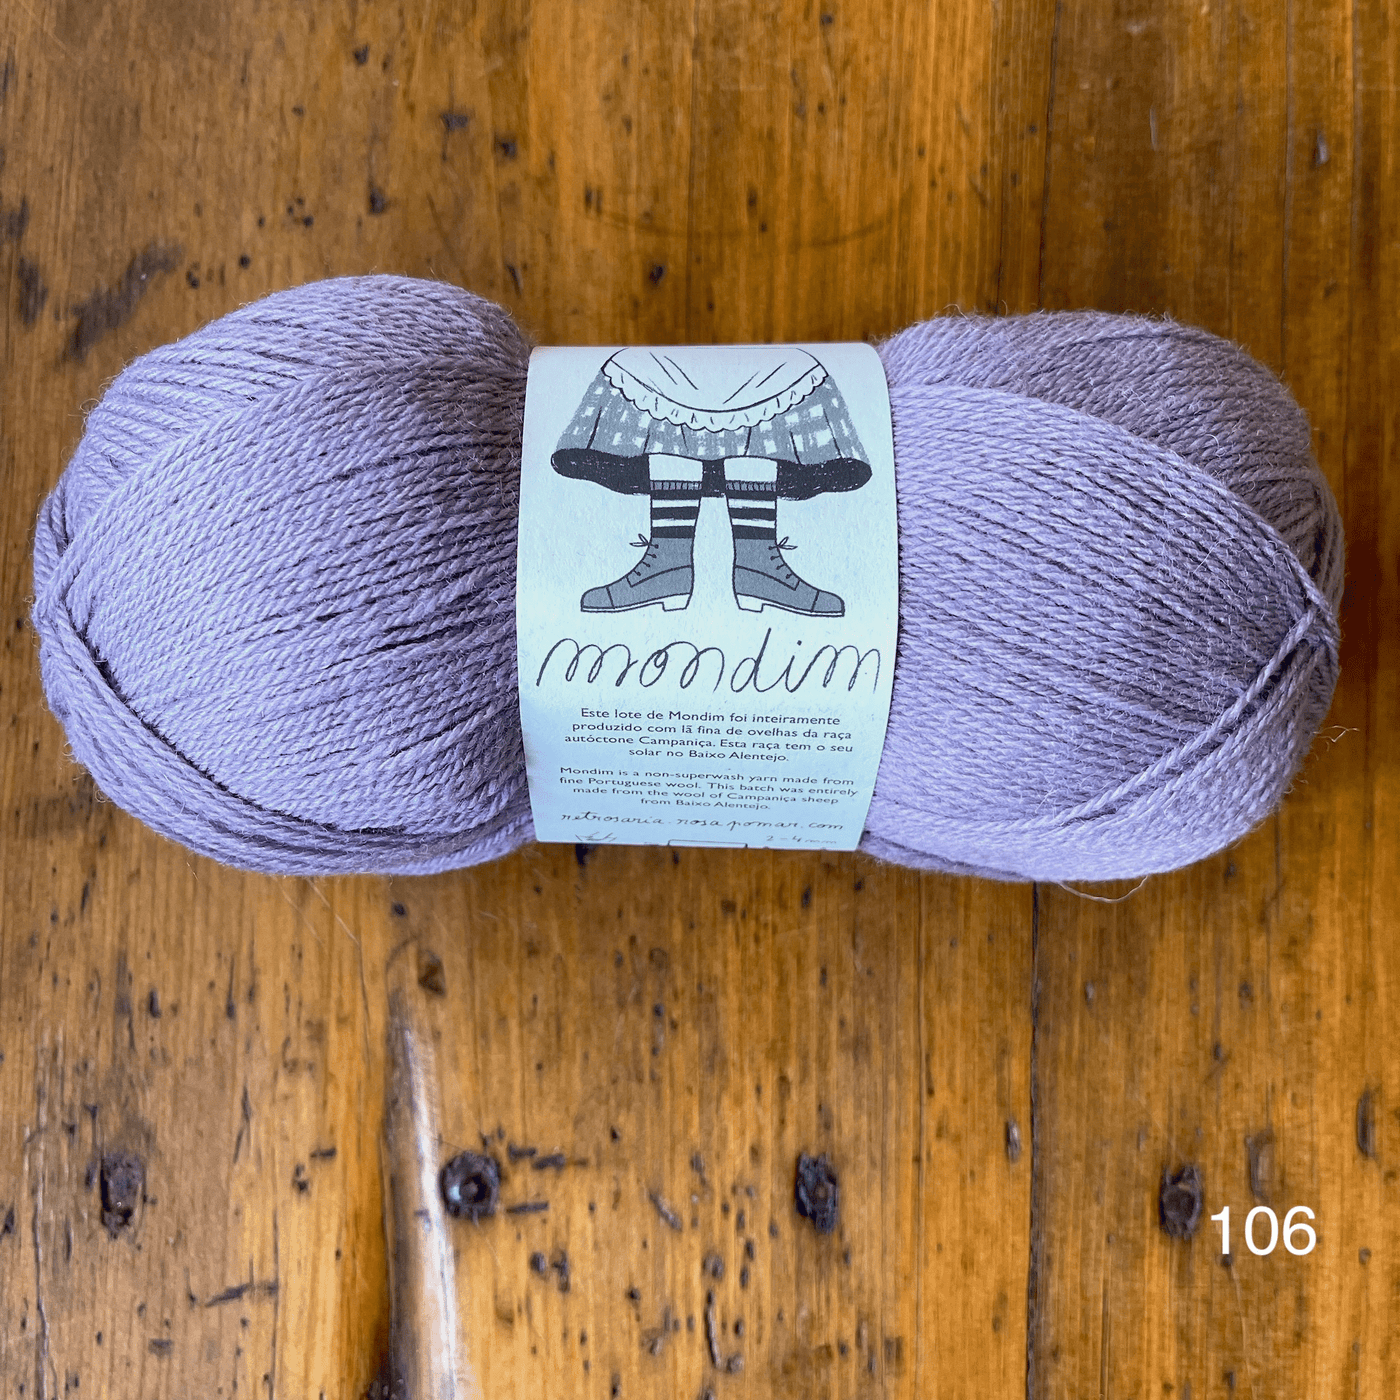 The Woolly Thistle Retrosaria Mondim Fingering Weight Yarn in 106 (purple)